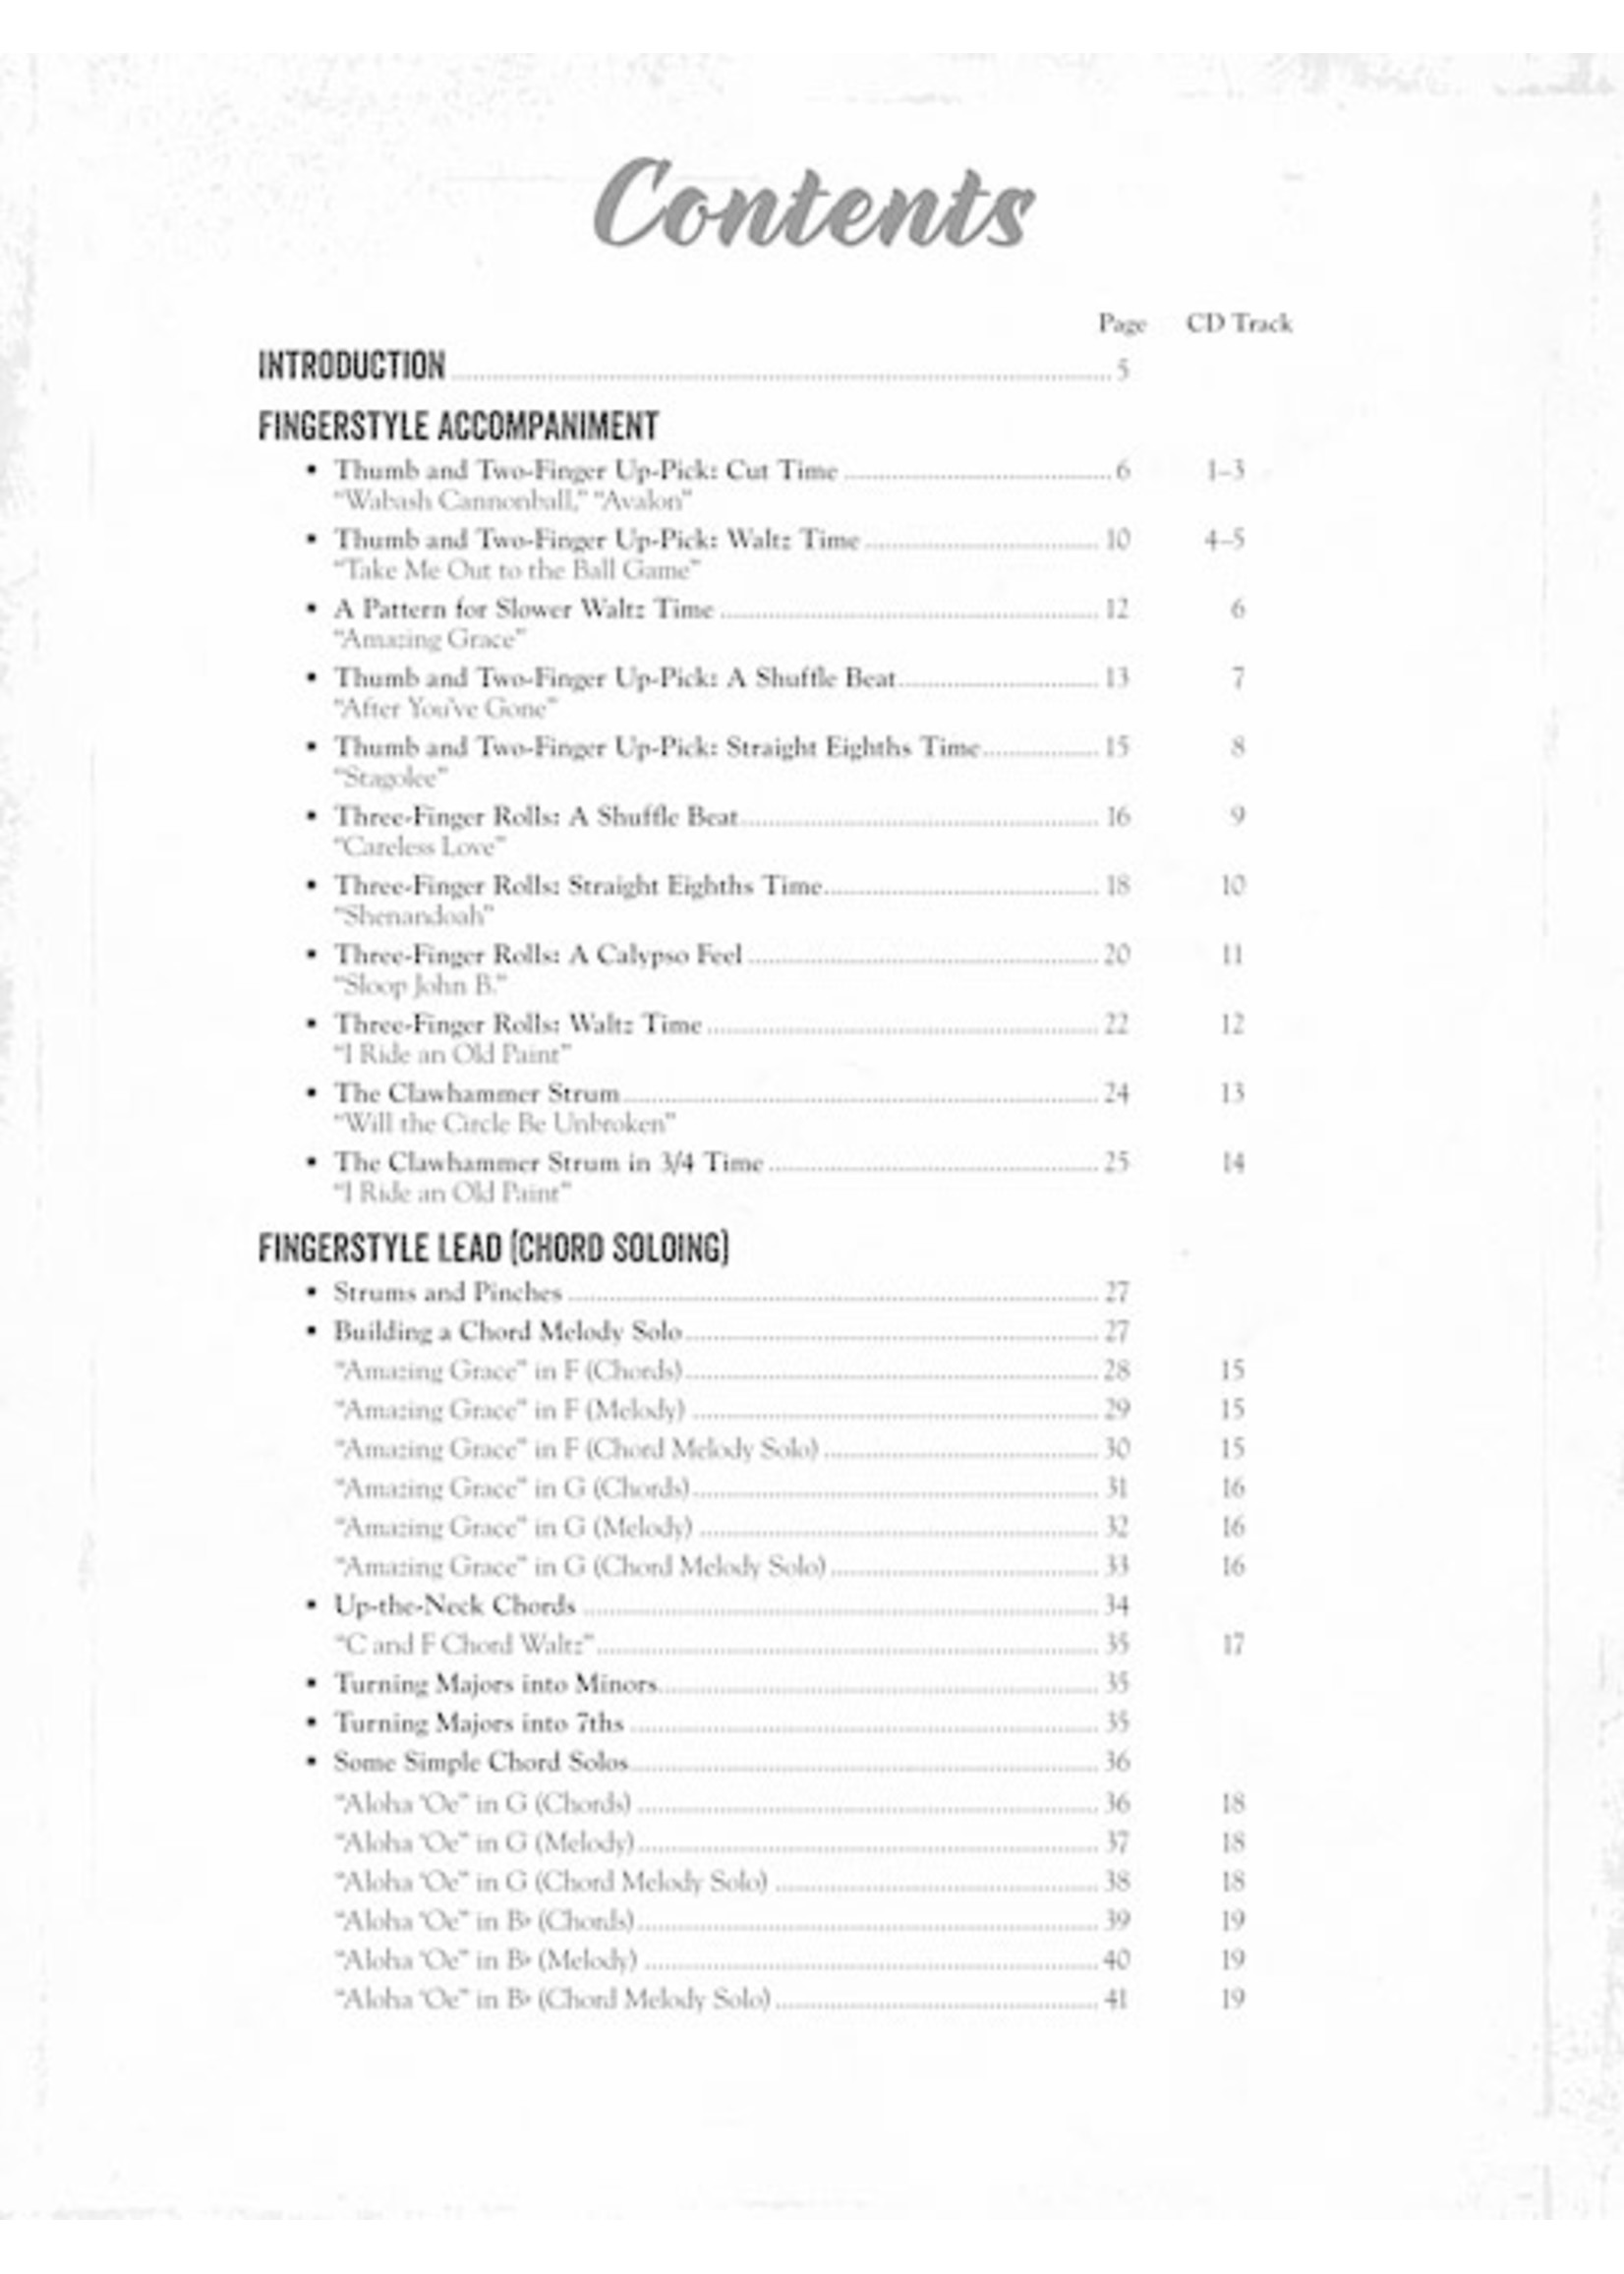 Hal Leonard Fingerstyle Ukulele - Method & Songbook